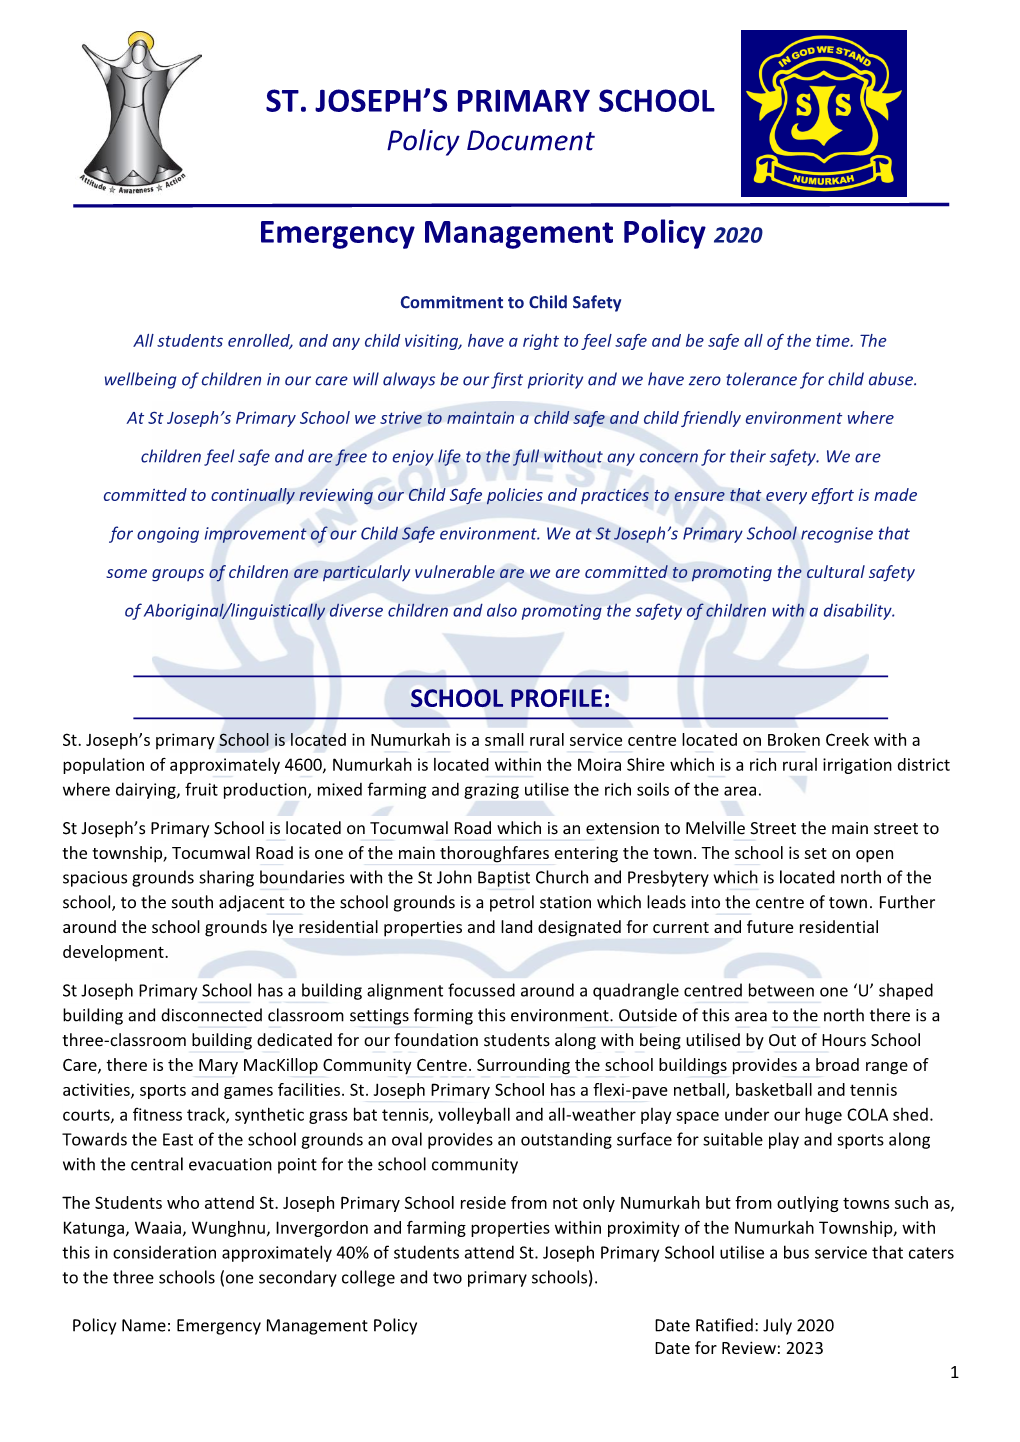 ST. JOSEPH's PRIMARY SCHOOL Emergency Management Policy 2020